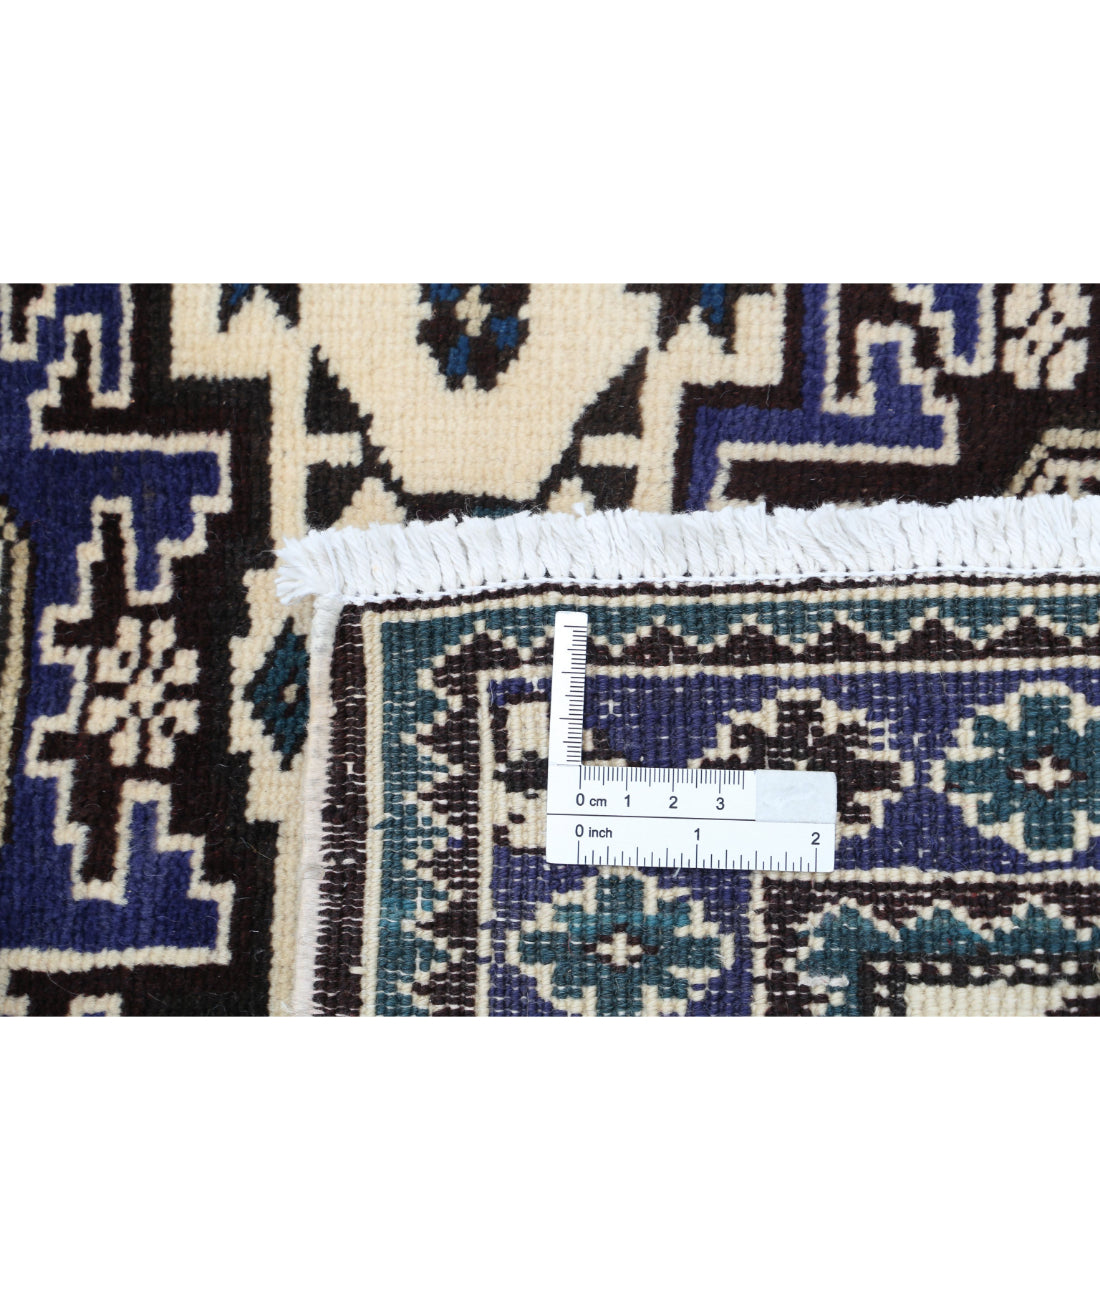 Hand Knotted Persian Kazak Wool Rug - 2'5'' x 3'4'' 2'5'' x 3'4'' (73 X 100) / Ivory / Blue